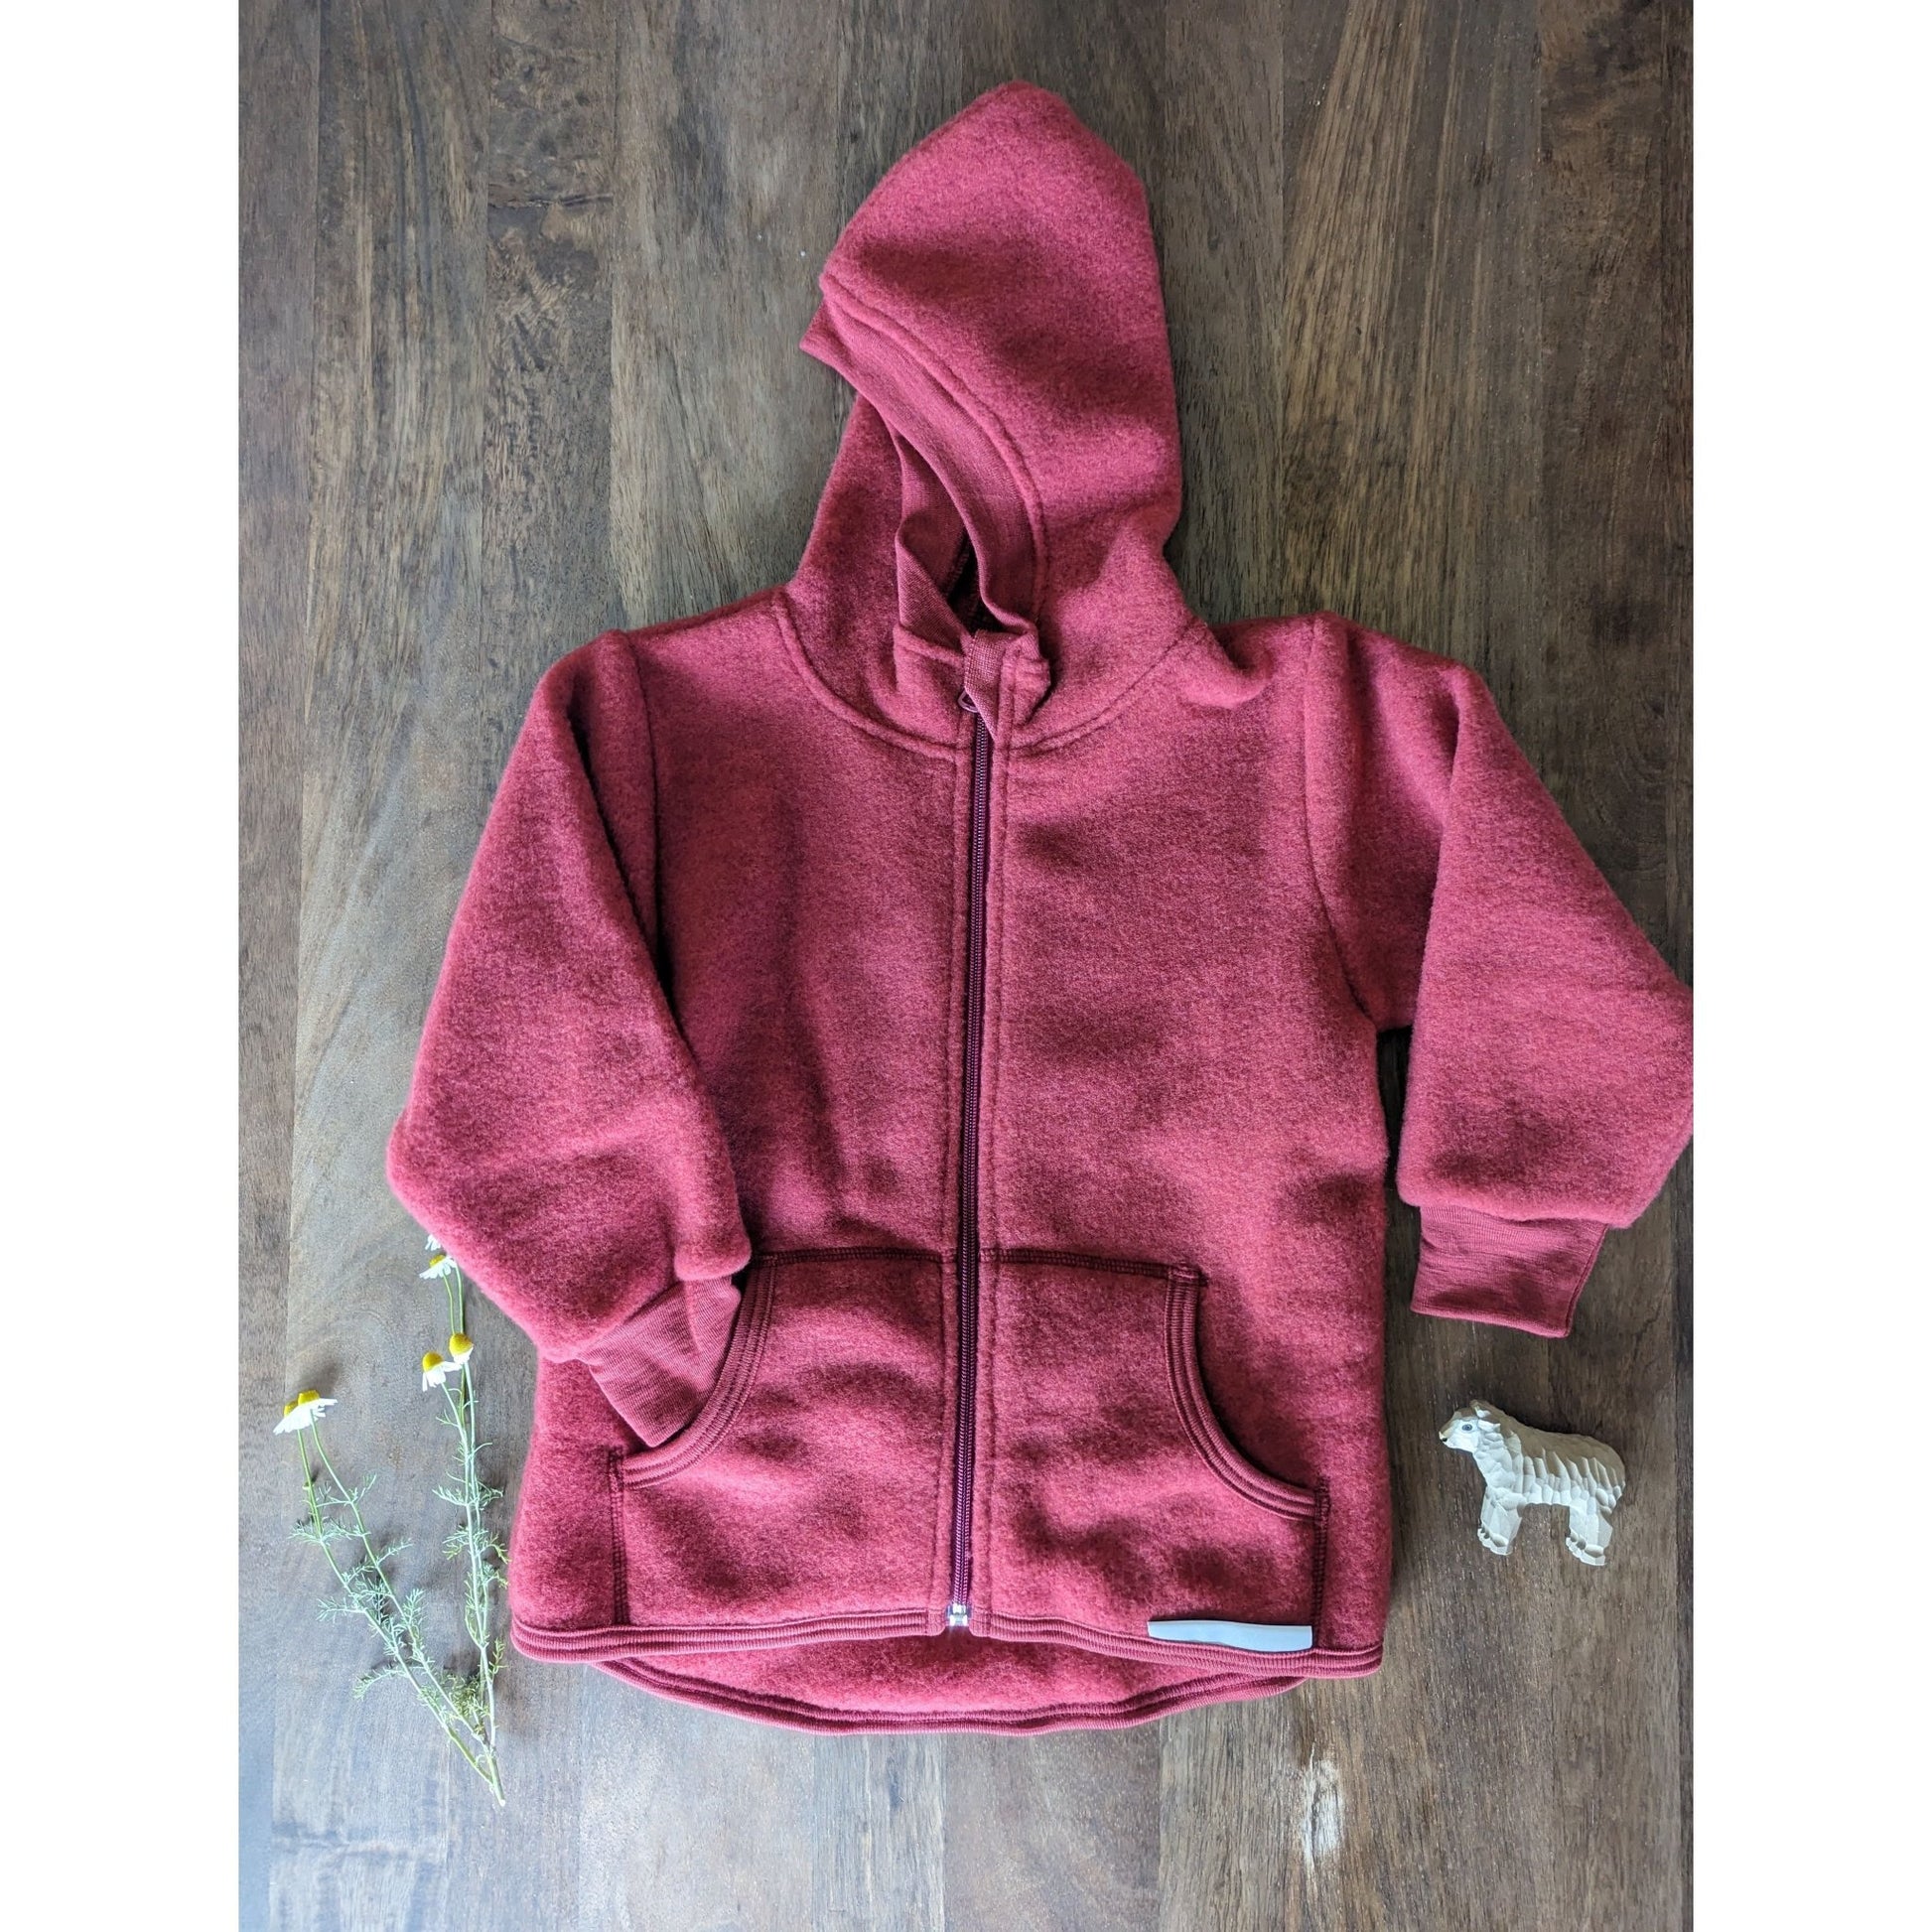 Engel - Organic Wool Fleece Jacket for Kids (5-10 years - 2 colors) - Nature's Wild Child